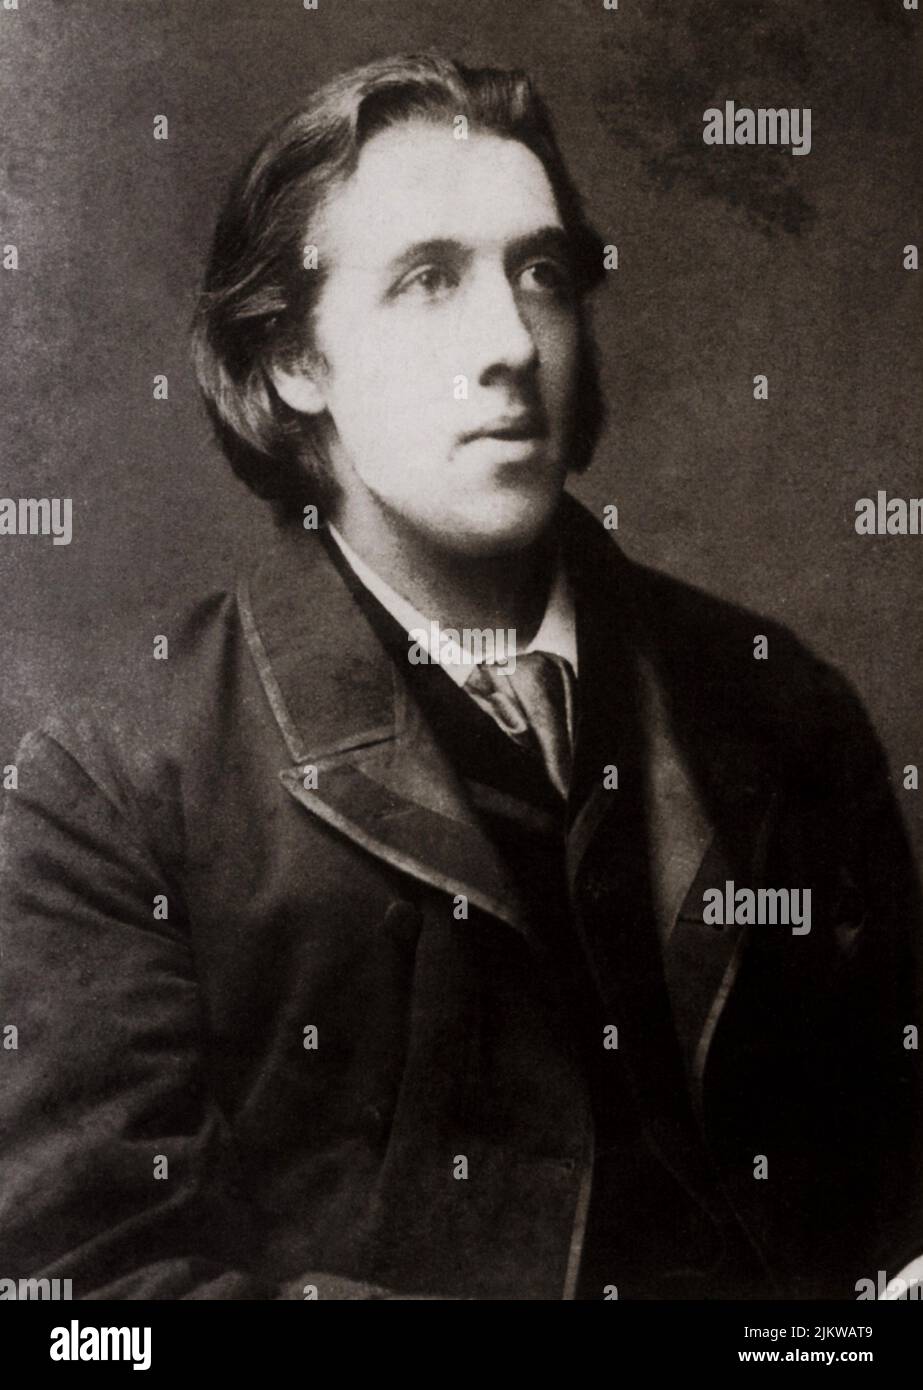 1881 ca. : Lo scrittore e drammaturista irlandese OSCAR WILDE ( 1854 - 1900 ) - SCRITTORE - LETTERATURA - POETA - POETA - POESIA - DRAMMATURGO - sceneggiatore - teatro - POESIA - DANDY - GAY - OMOSESSUALITÀ - OMOSESSUALE - omosessuale - omosessuale - omosessualità -- -- Archivio GBB Foto Stock